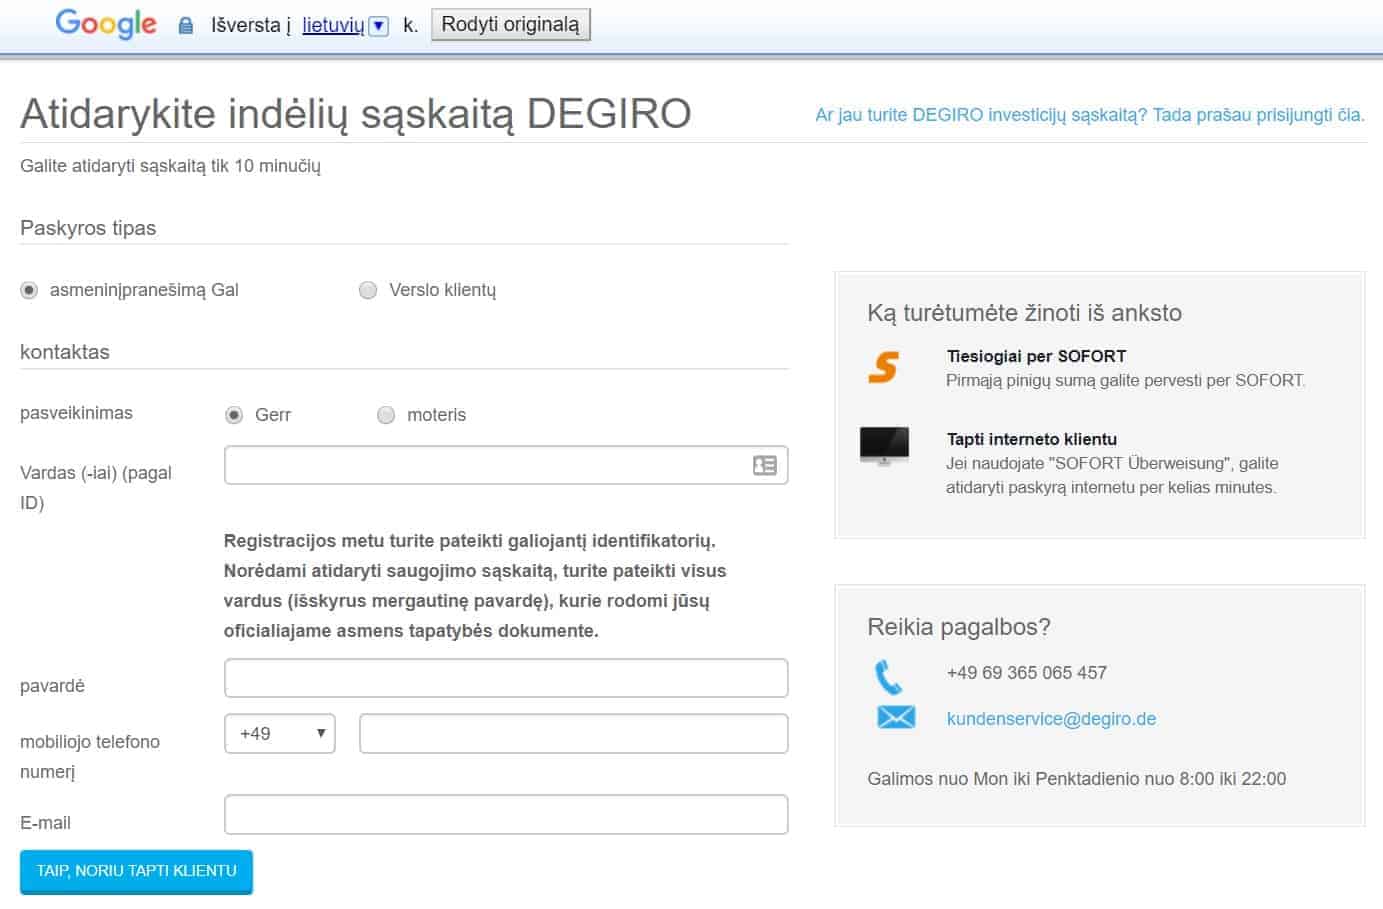 Degiro brokeris google translate